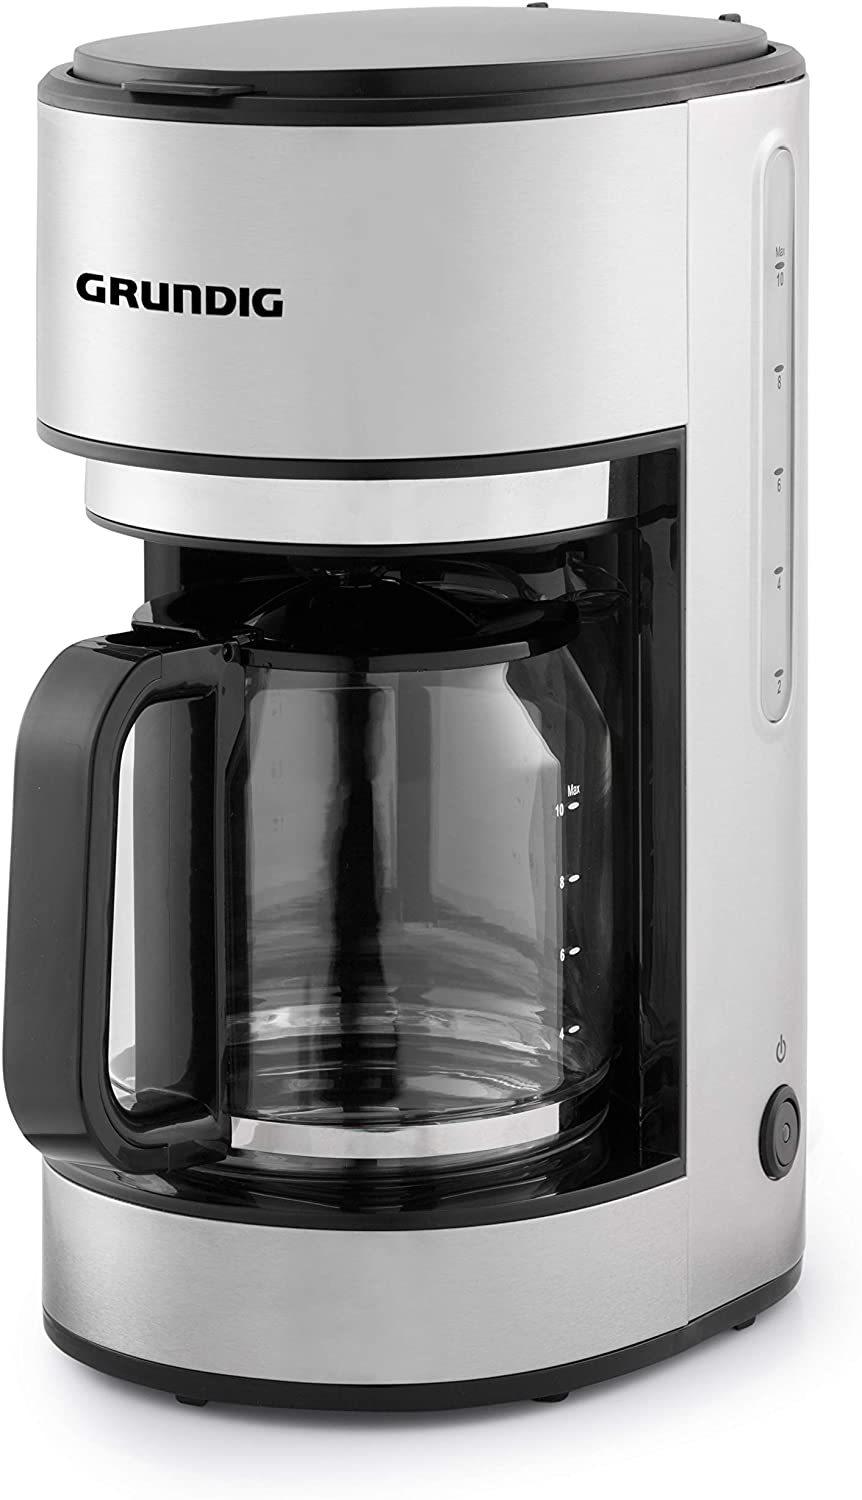 Grundig KM5620 GMS0910 KM 5620 Coffee Machine Stainless Steel Black Capacity Cups = 10 Glass Jugs, Keep Warm 1000 W